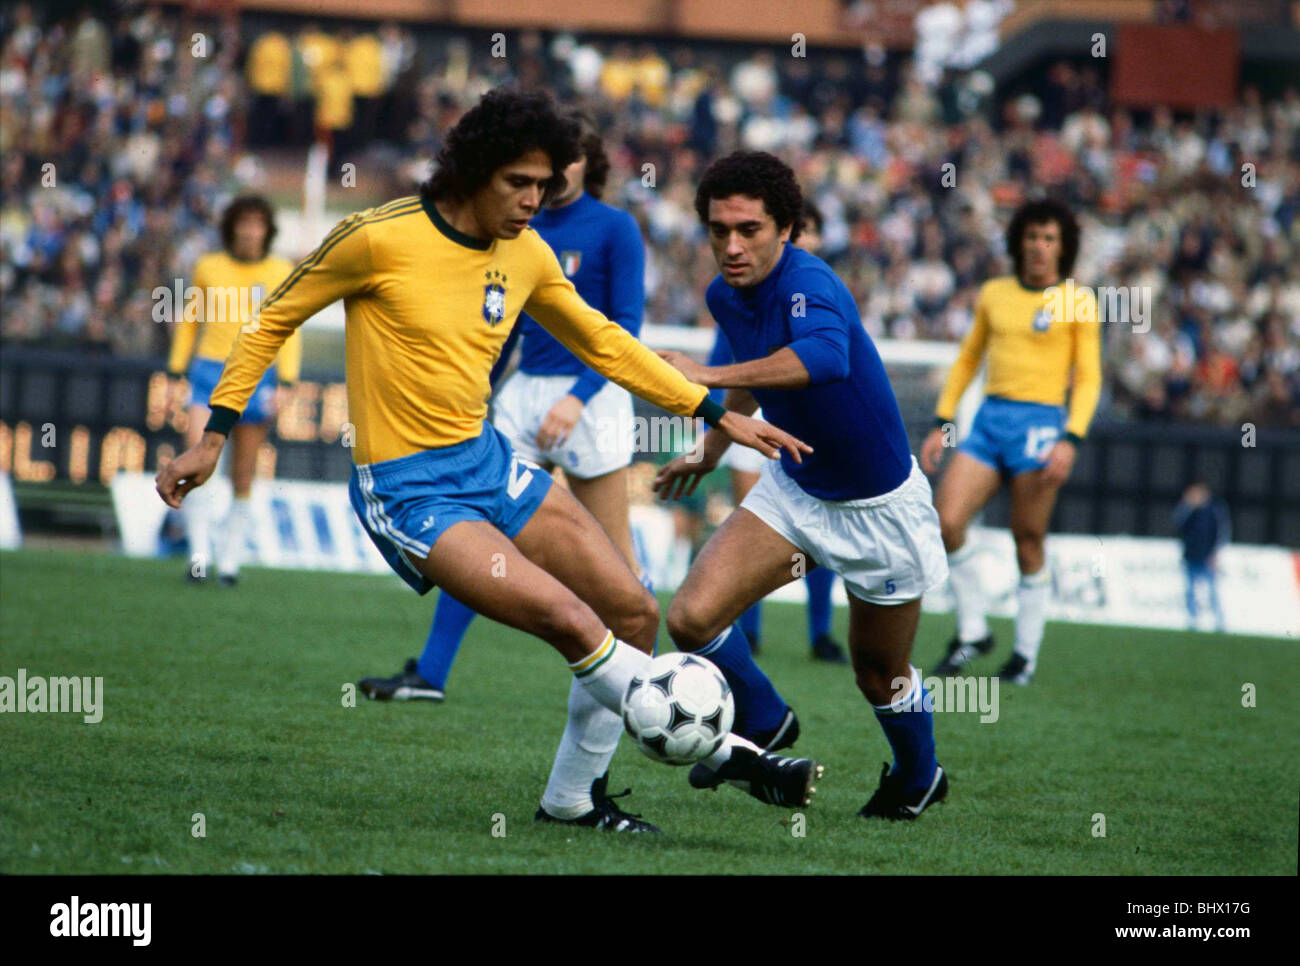 1978 fifa world cup ball